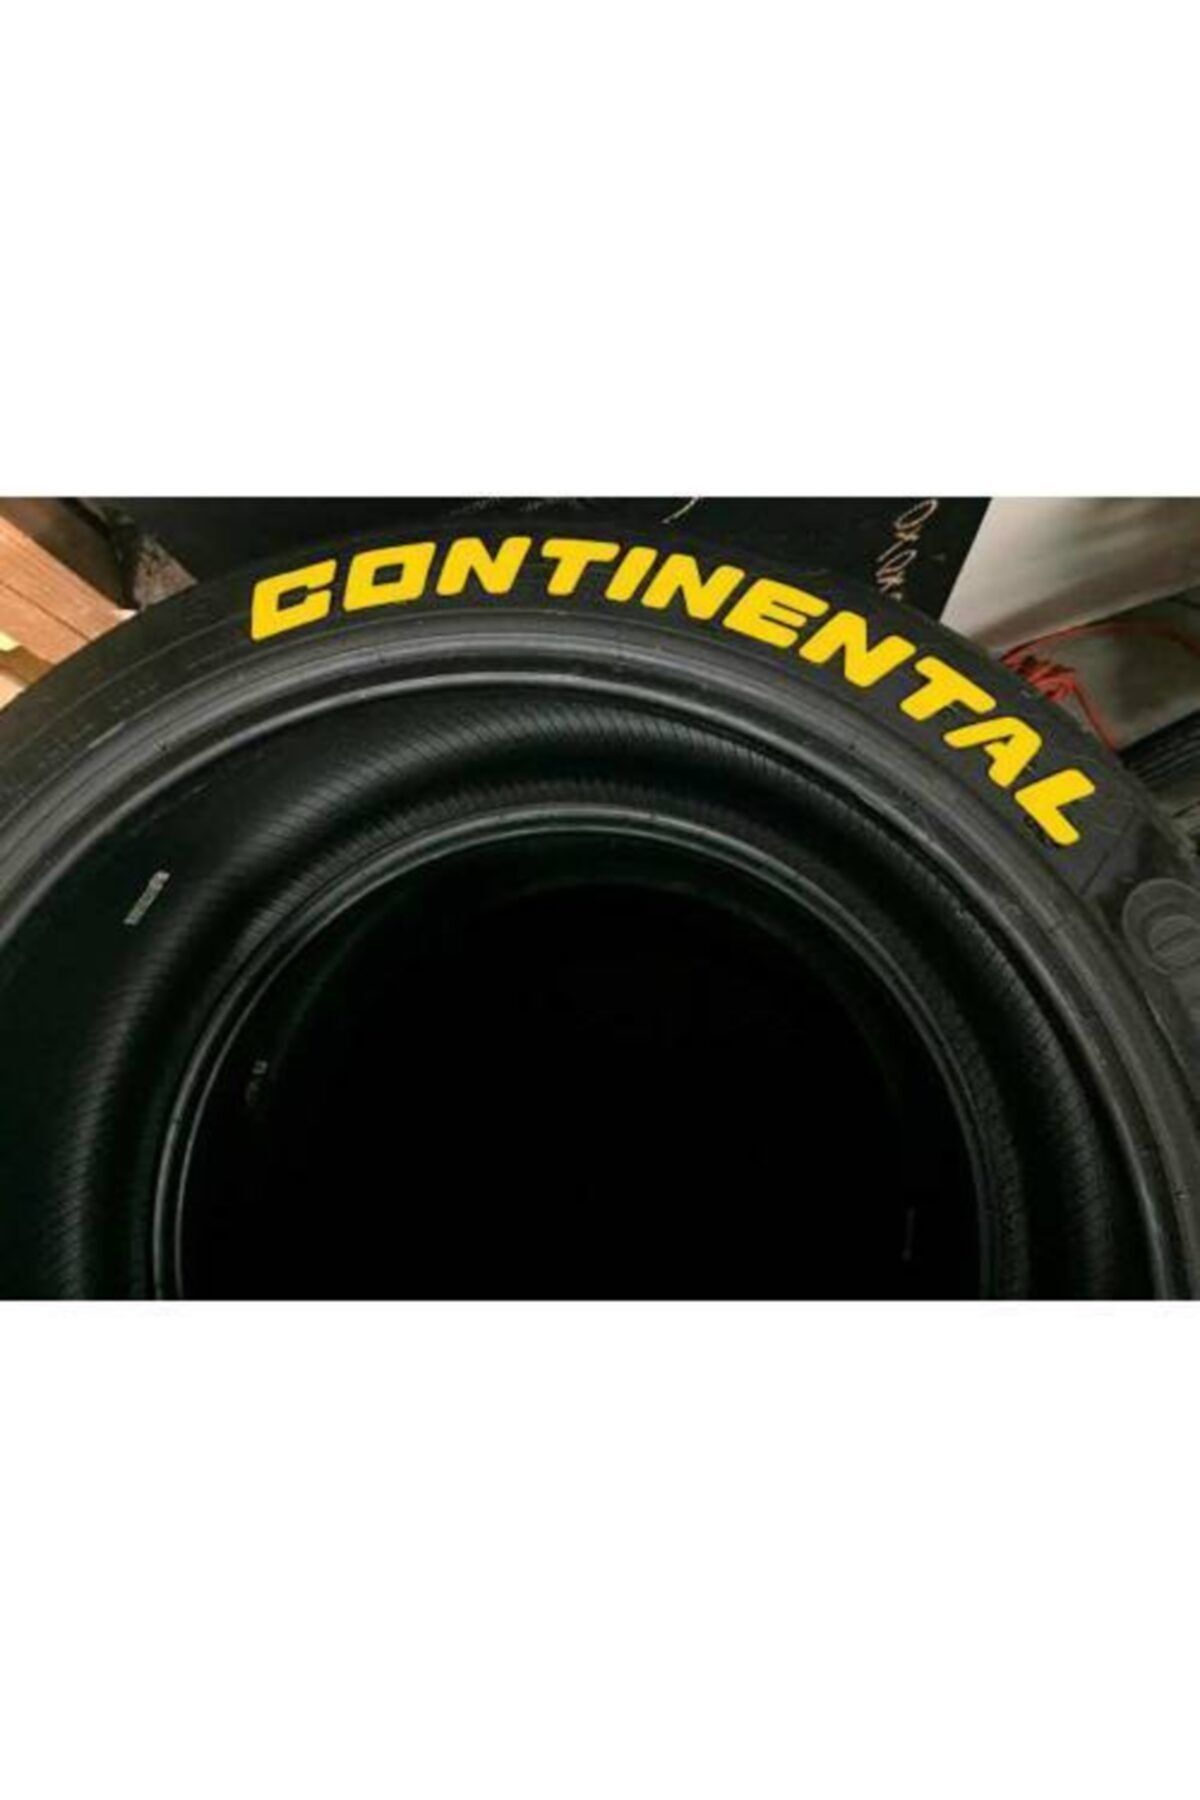 Continental Lastik Yazısı 8 Adet 1.sınıf Kalite Solmaz Araç Motorsiklet Lastik Stiker Etiket